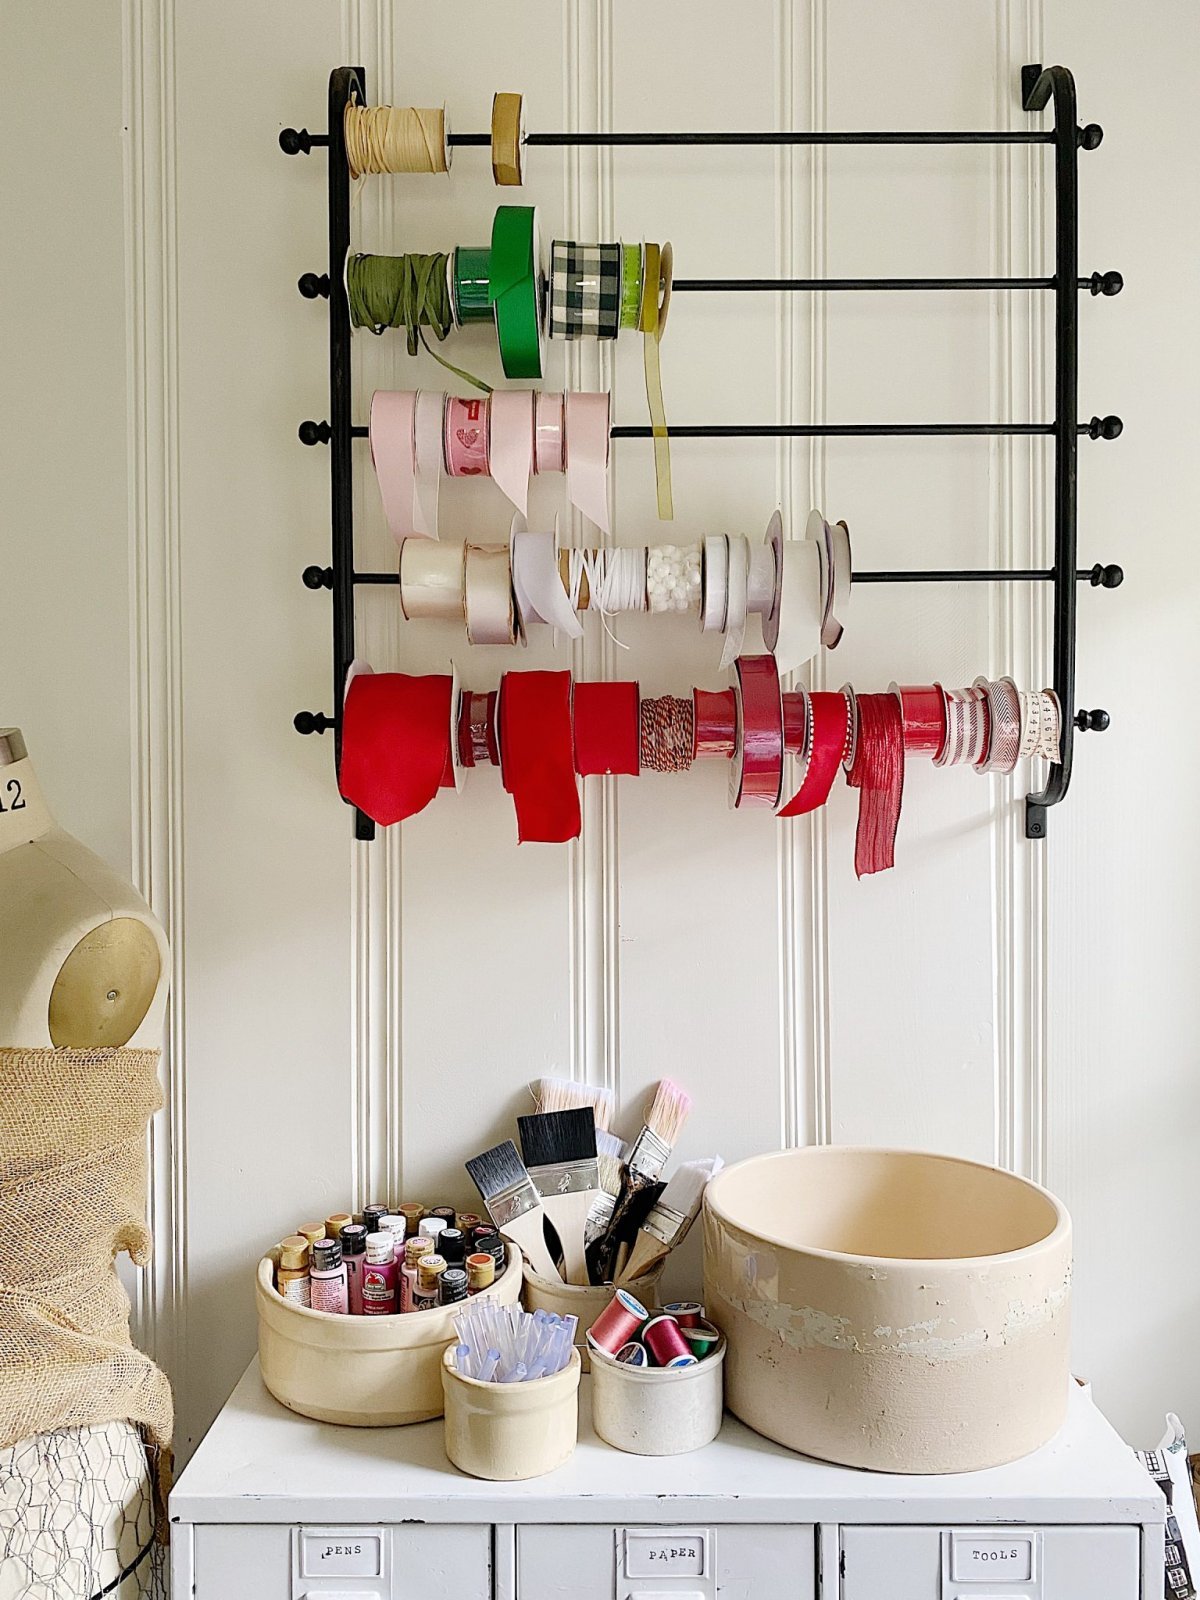 DIY ribbon storage shelf organizer - FINISHED! CRAFT ROOM wall